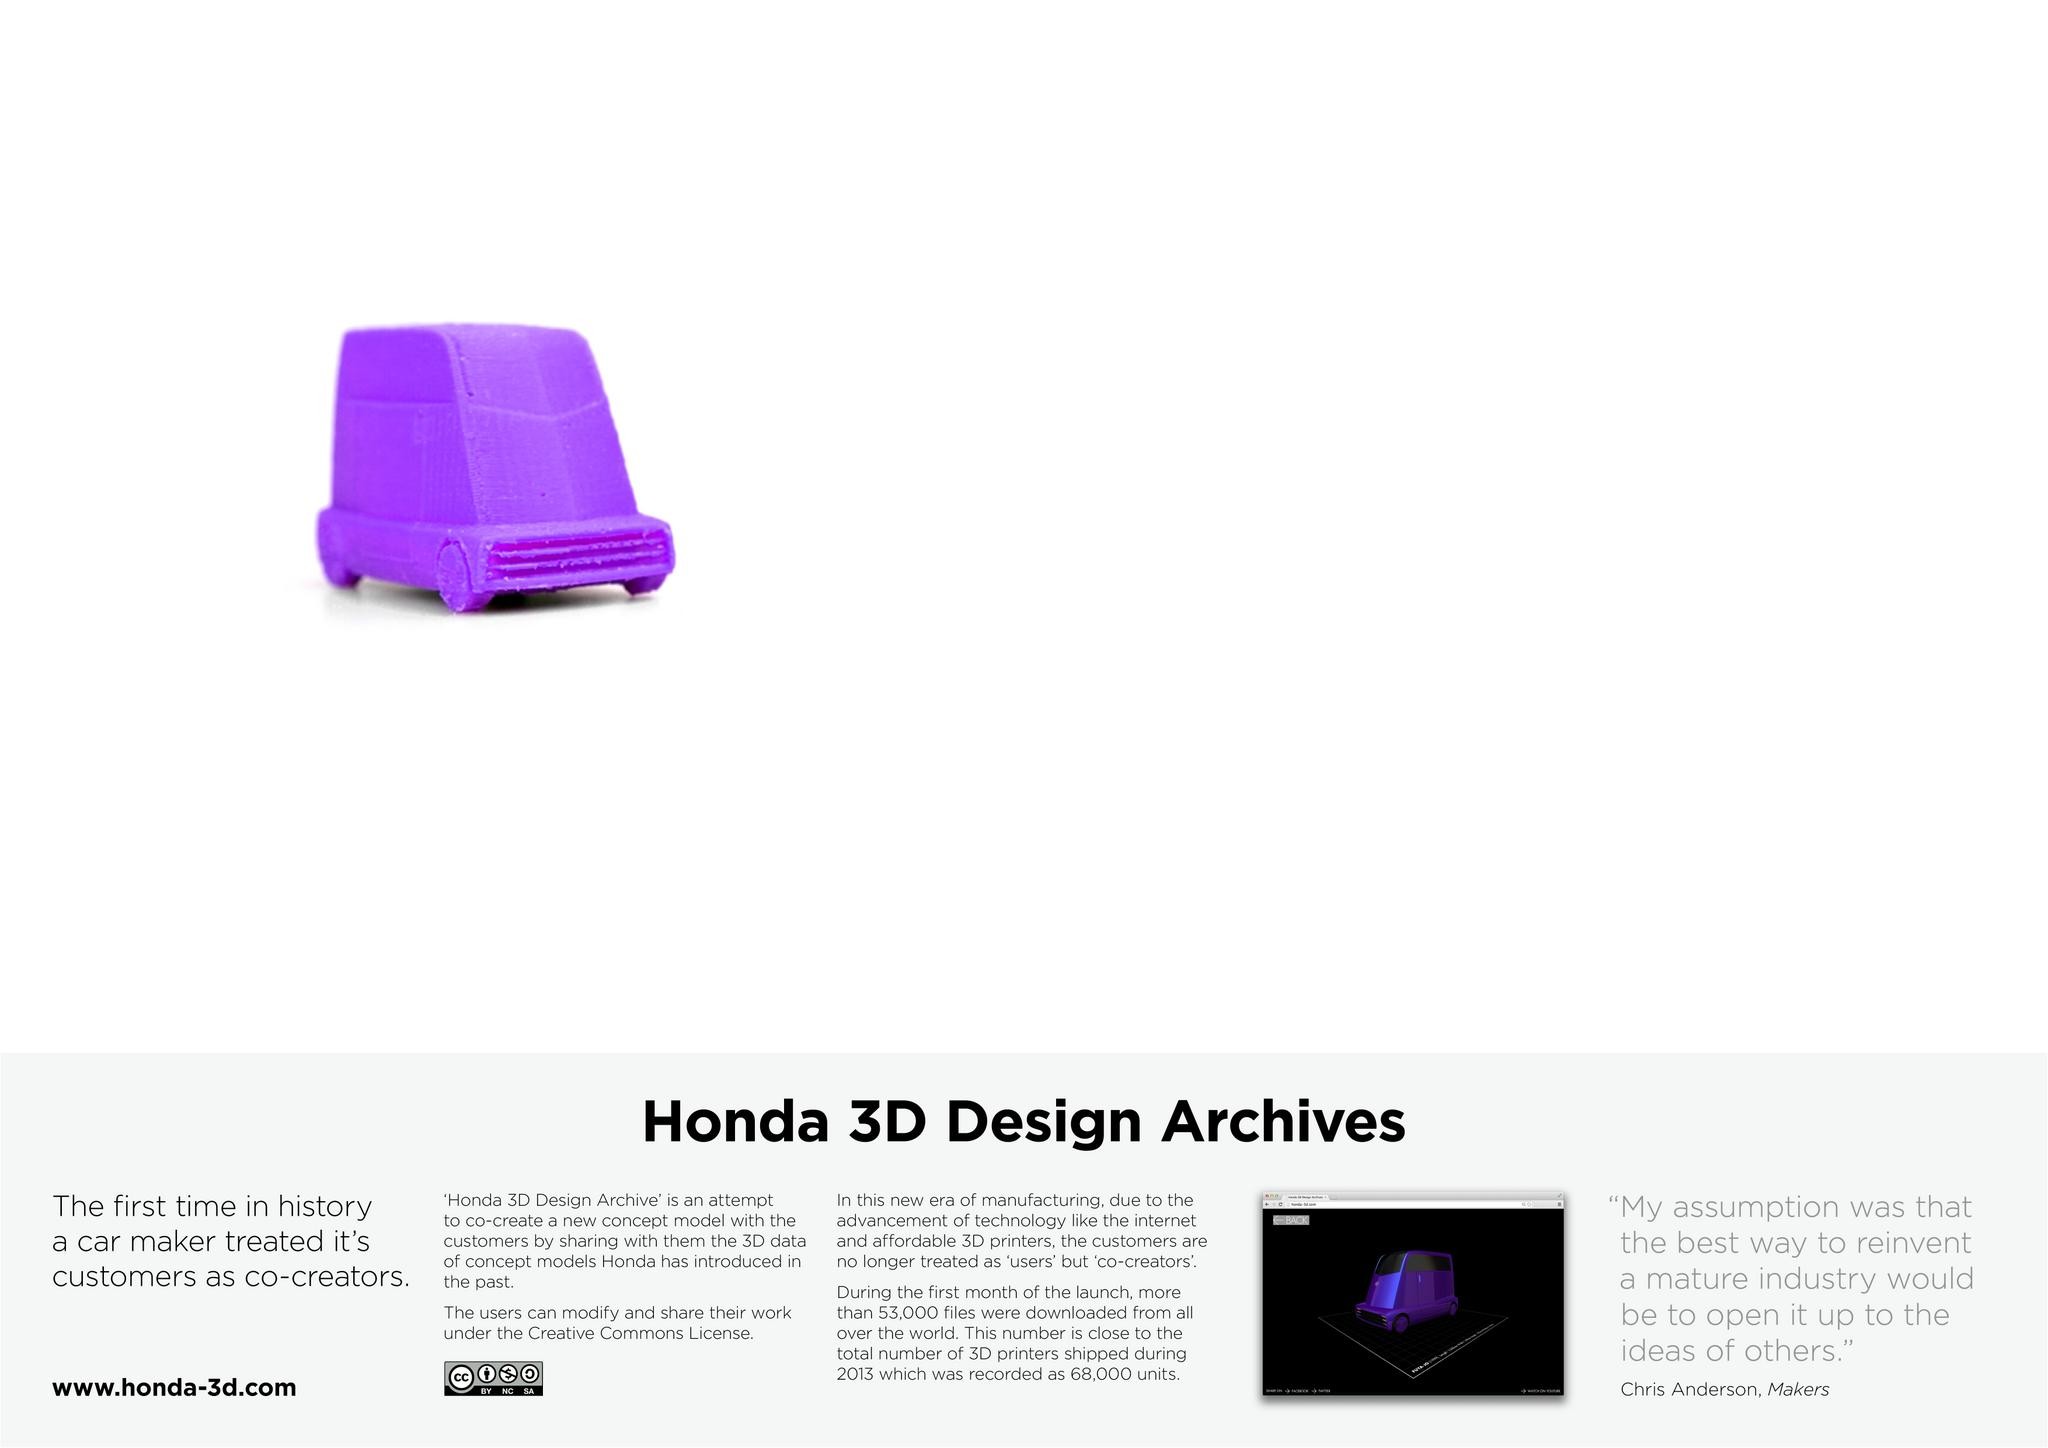 HONDA 3D DESIGN ARCHIVES